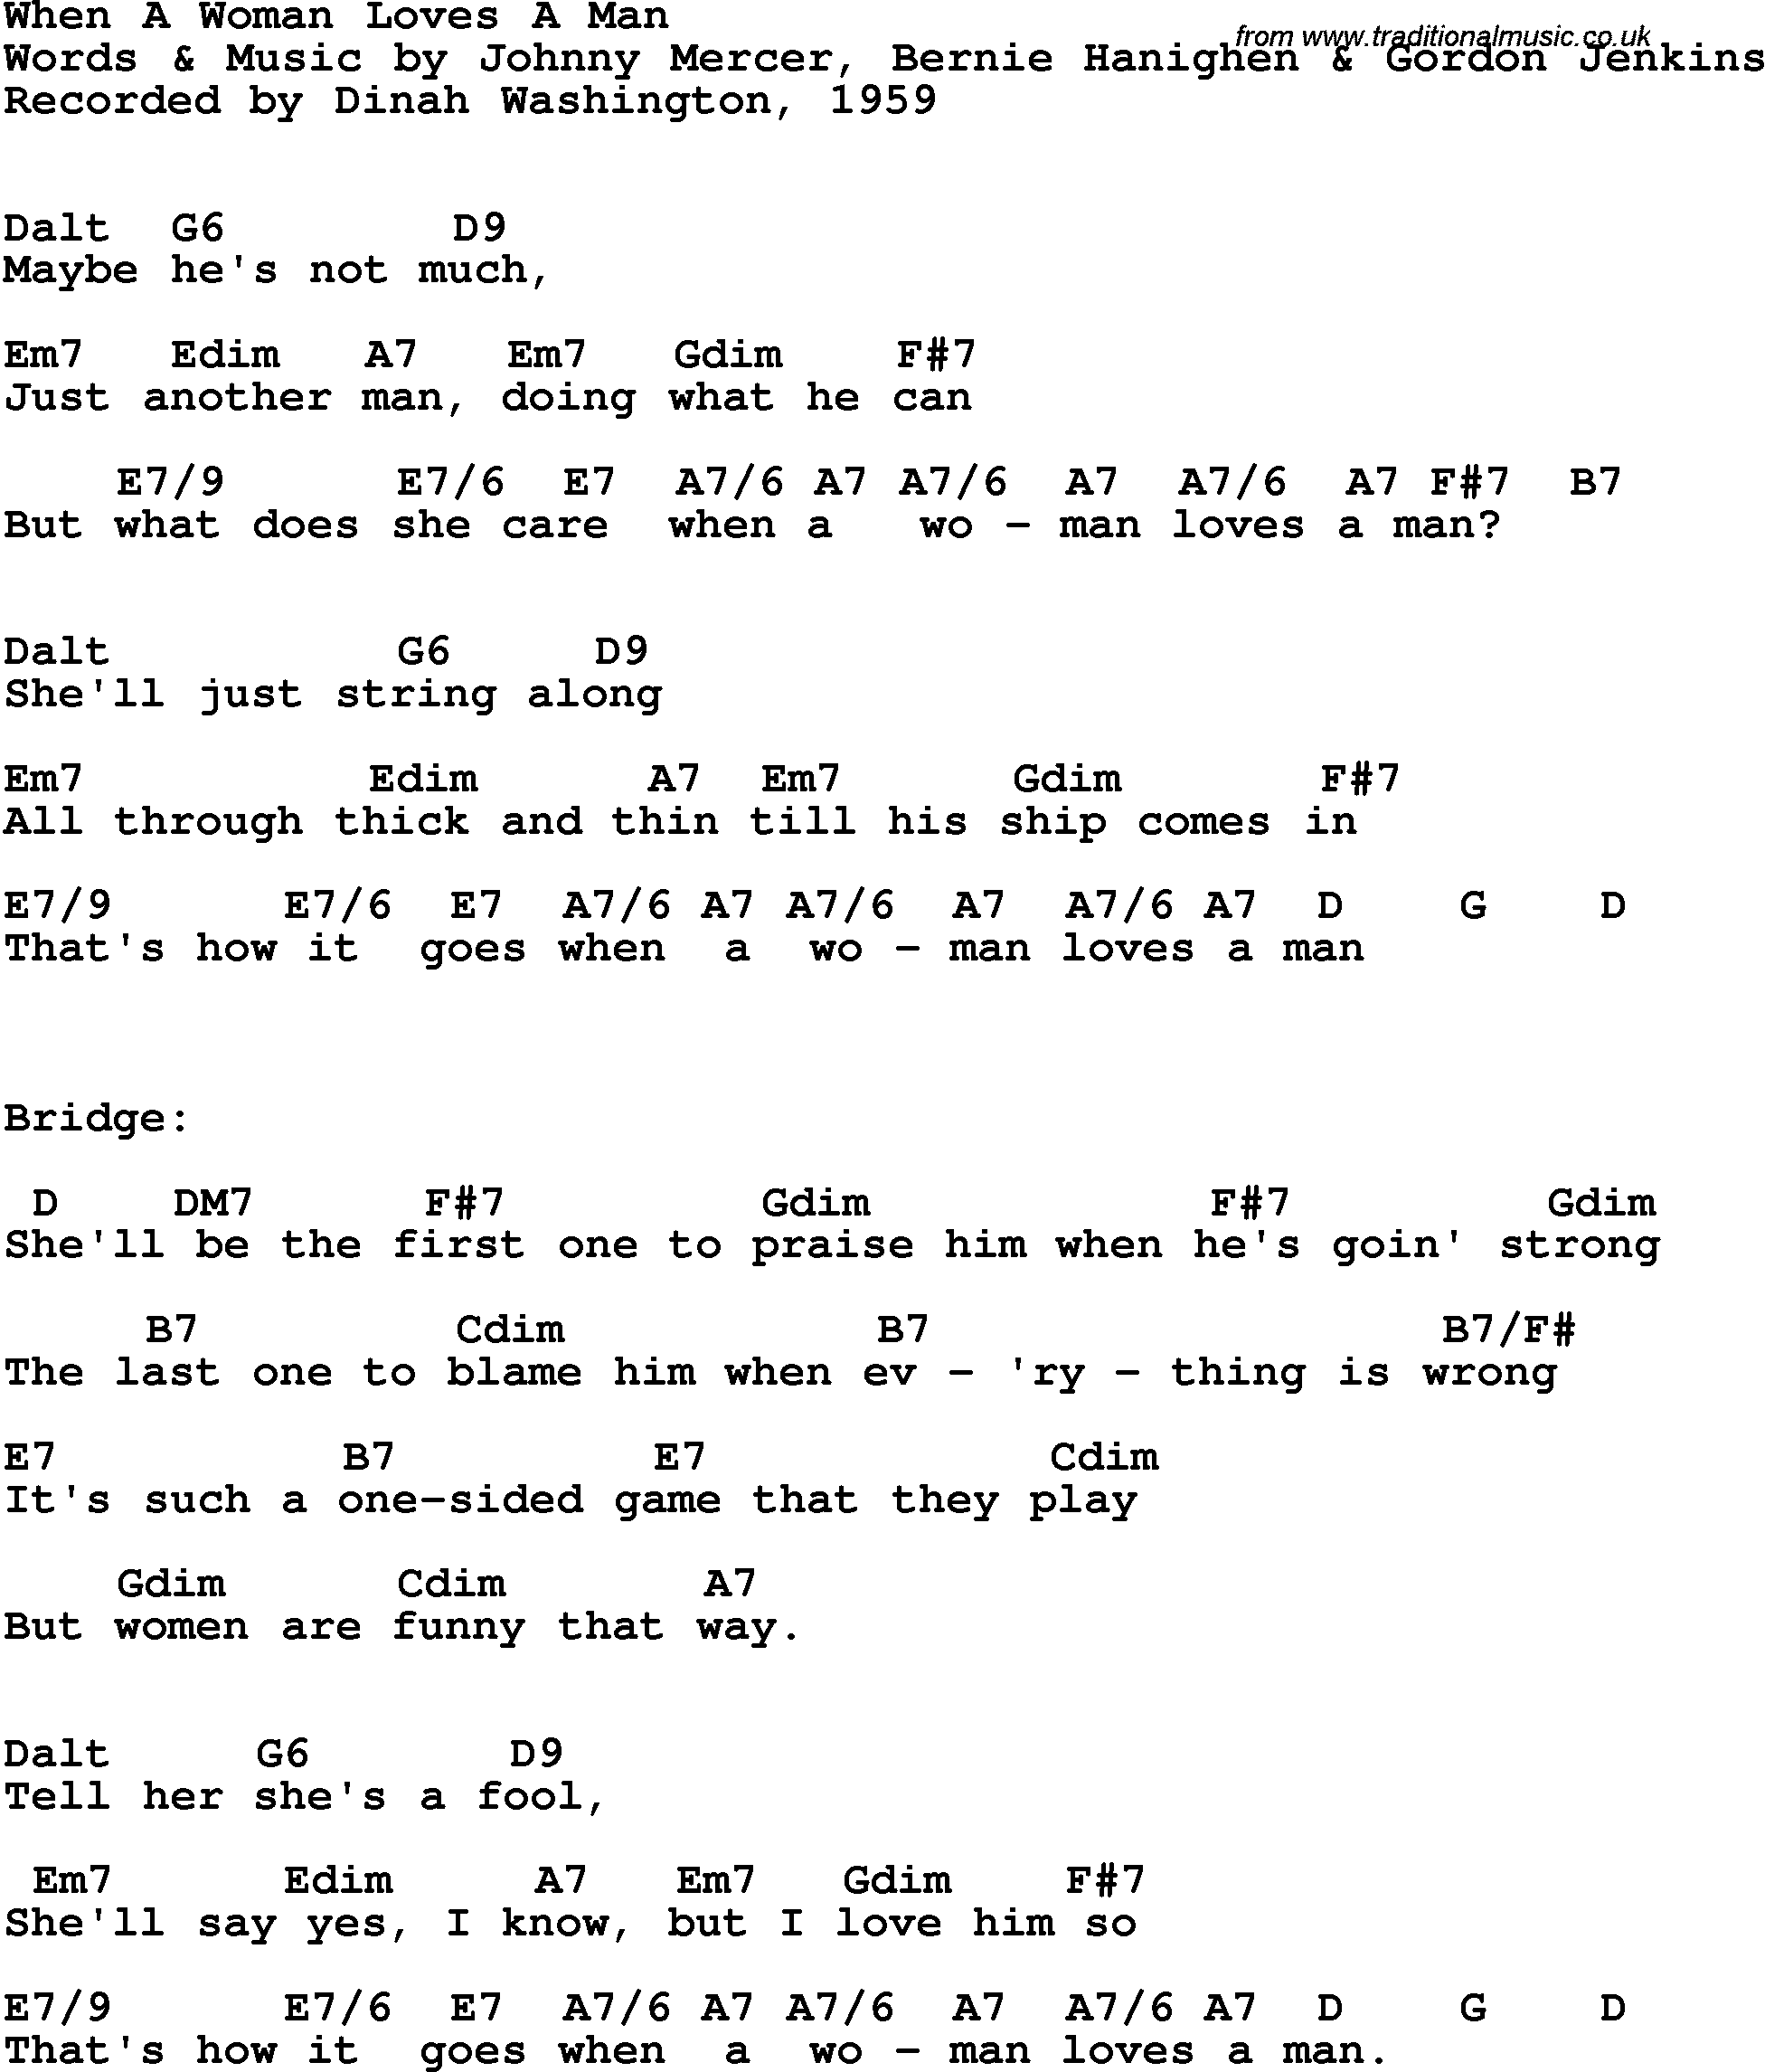 Song Lyrics with guitar chords for When A Woman Loves A Man - Dinah Washington, 1959